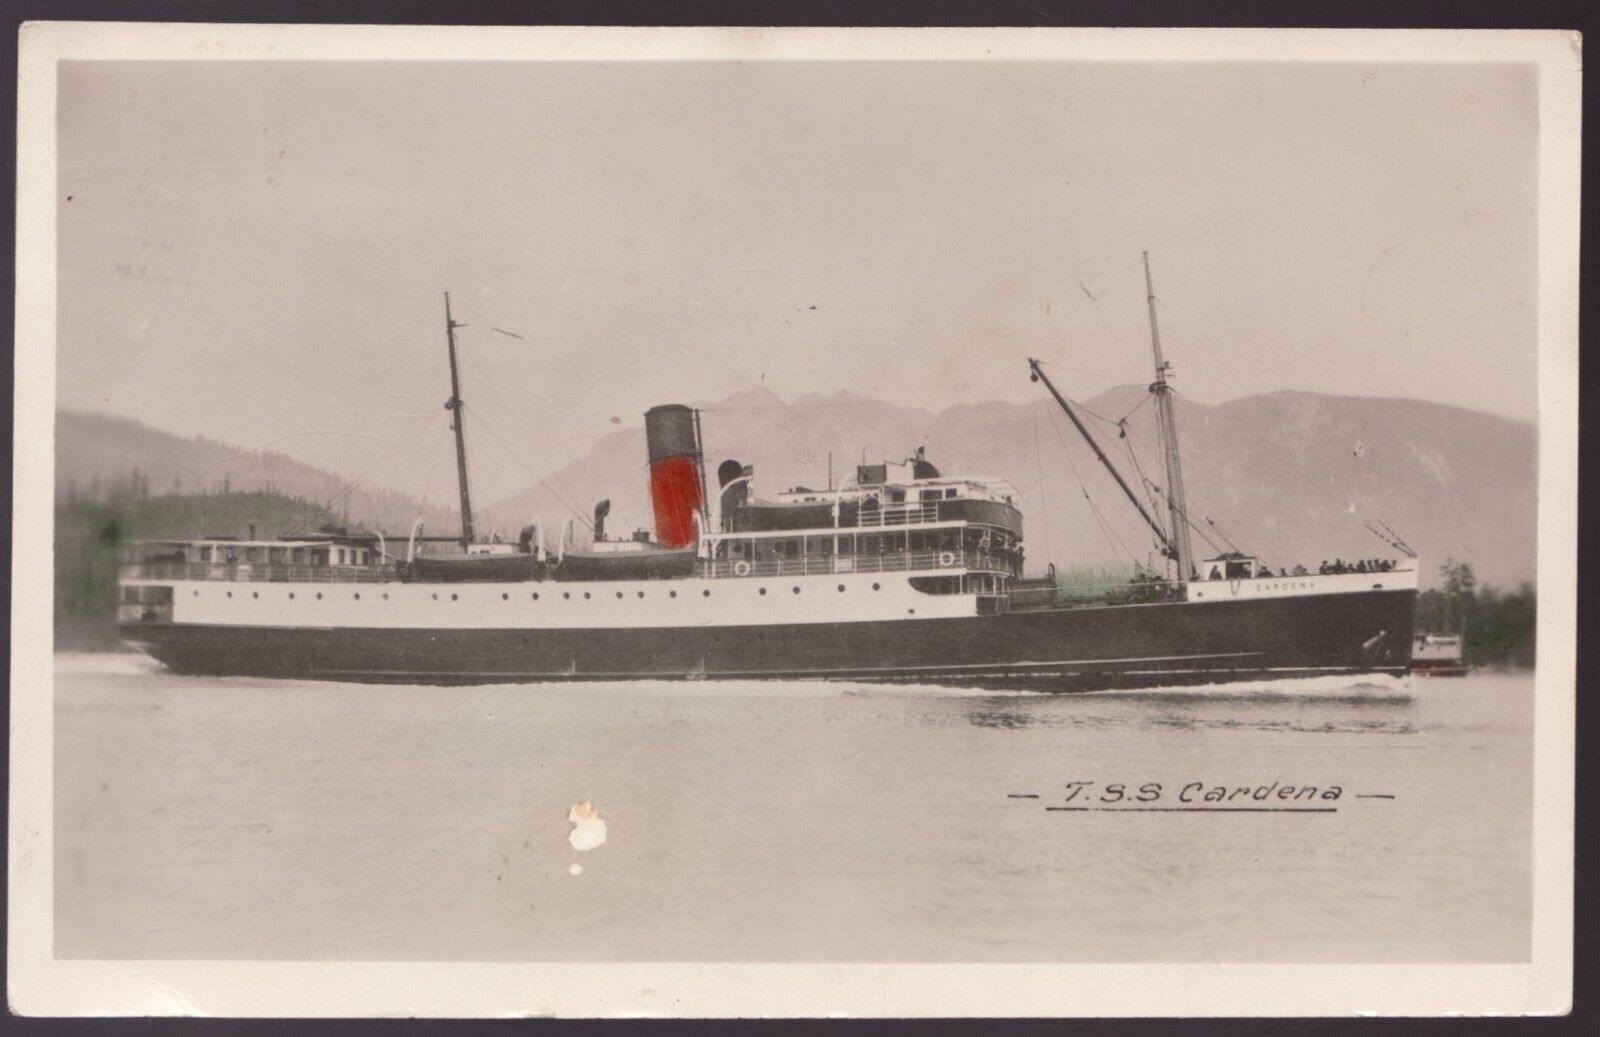 1948 RPPC Postcard - posted - SS Cardena ferry boat. Coastal B.C. Workhorse